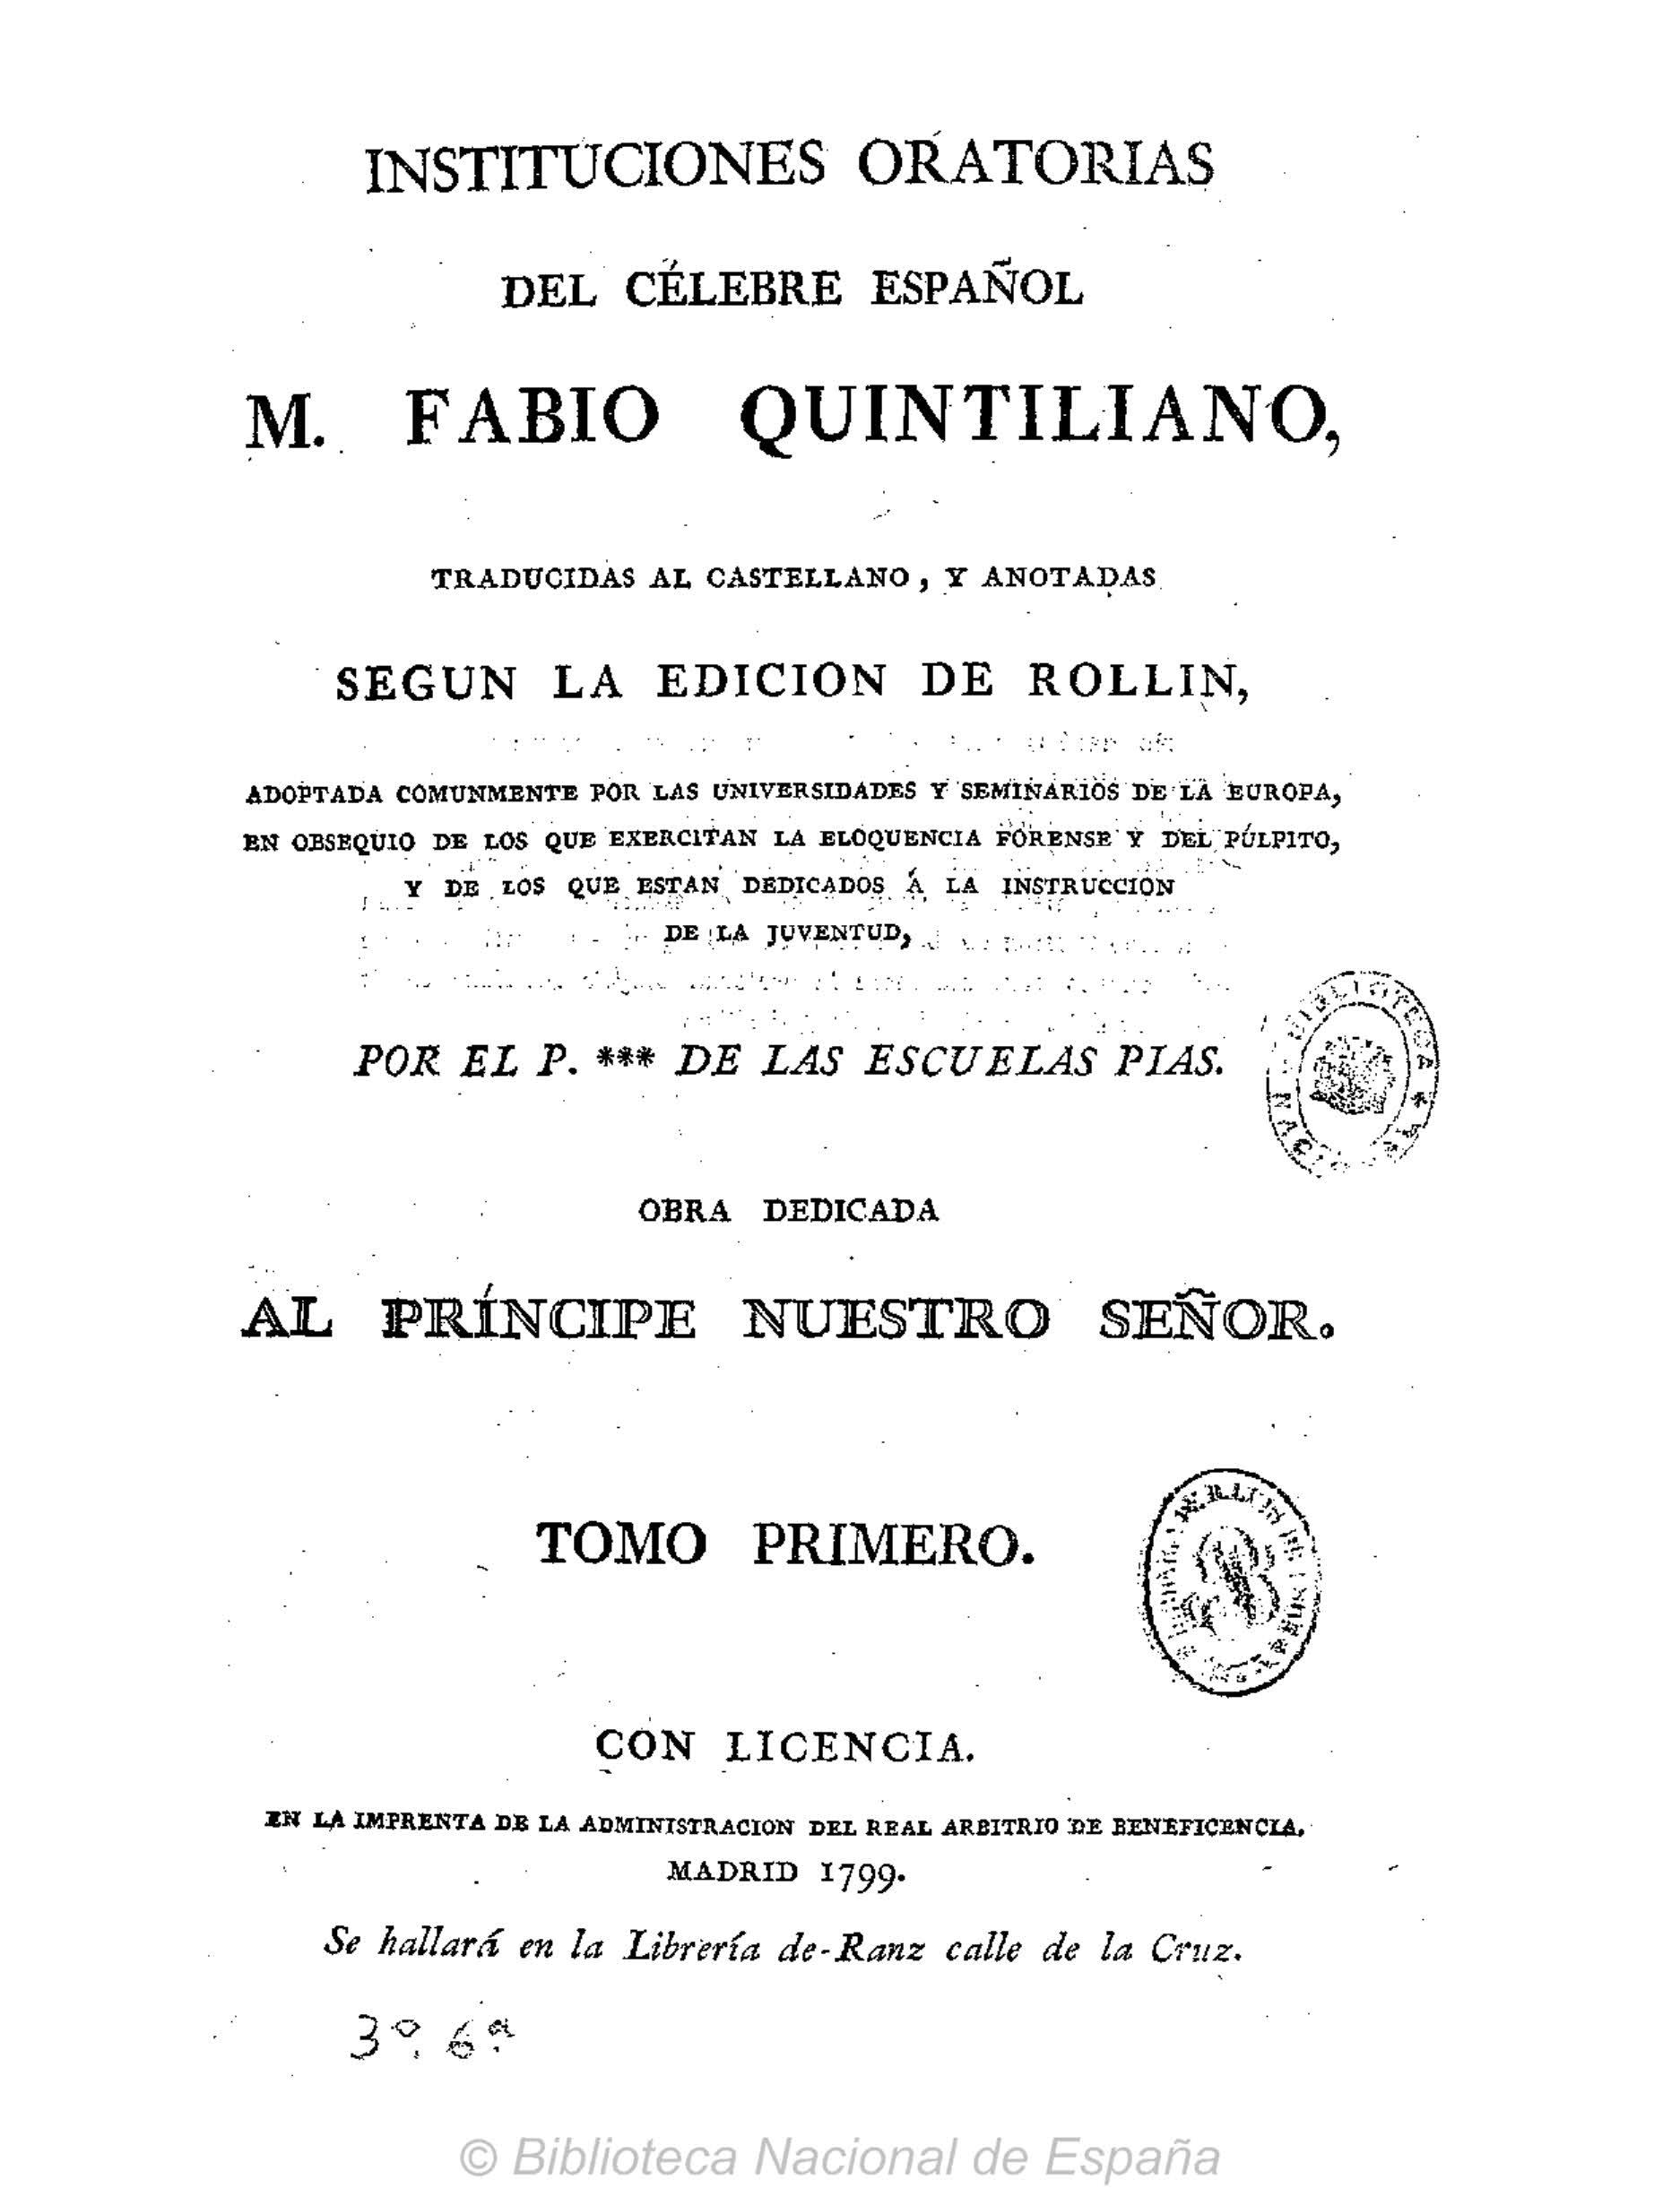 Instituciones oratorias del célebre español M. Fabio Quintiliano, Tomo I